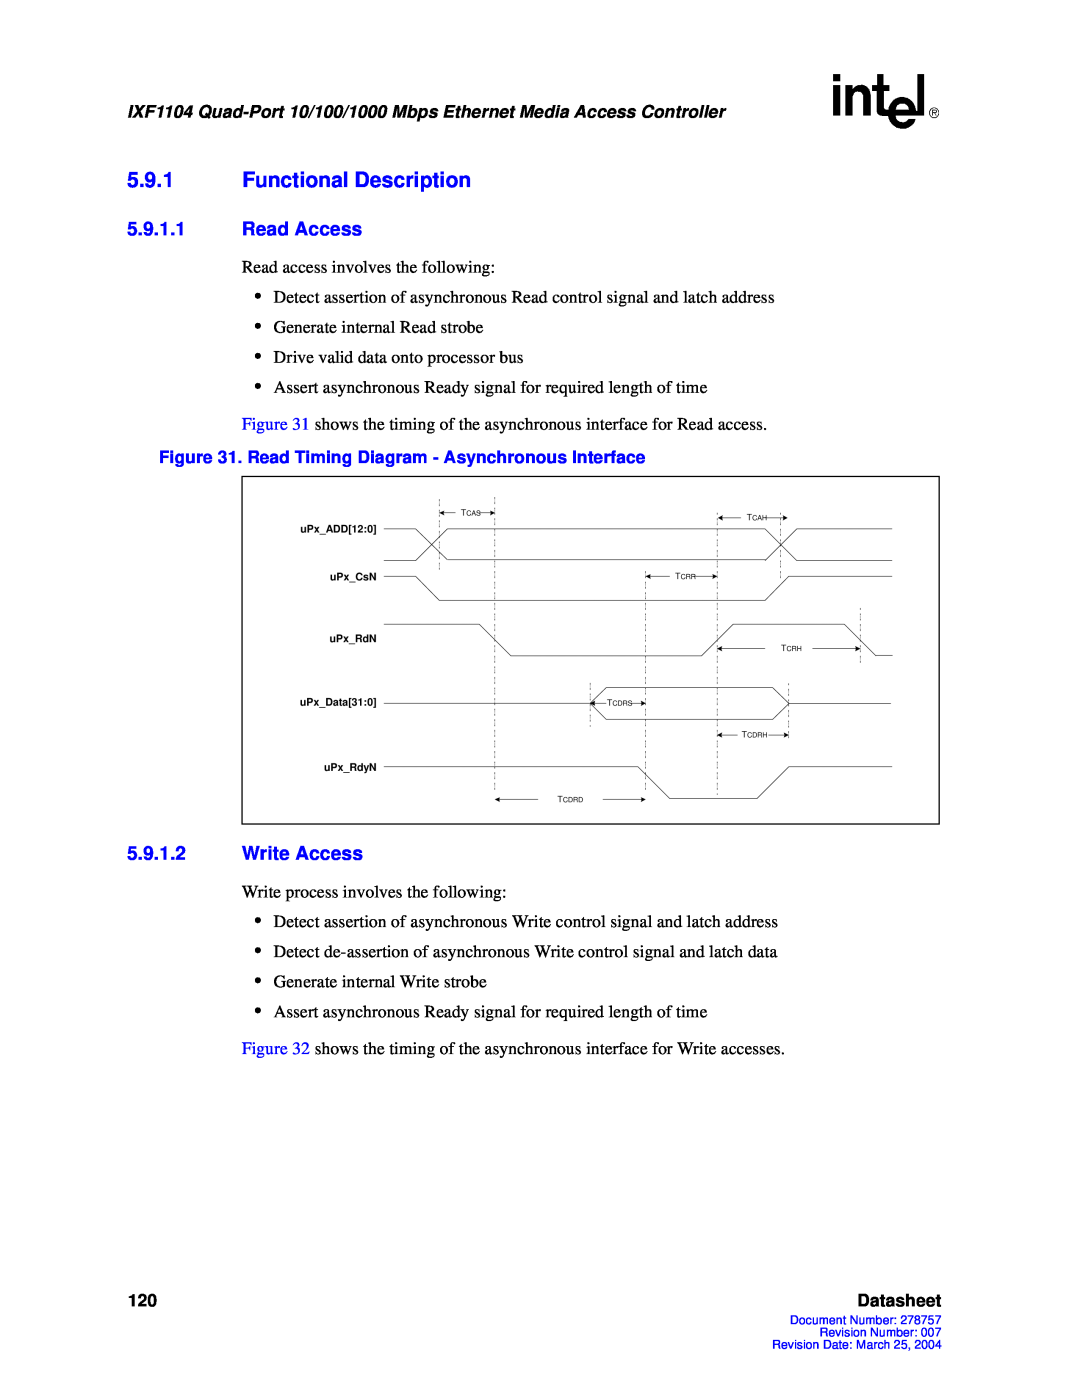 Intel IXF1104 manual 5.9.1Functional Description, 5.9.1.1Read Access, 5.9.1.2Write Access, Datasheet 